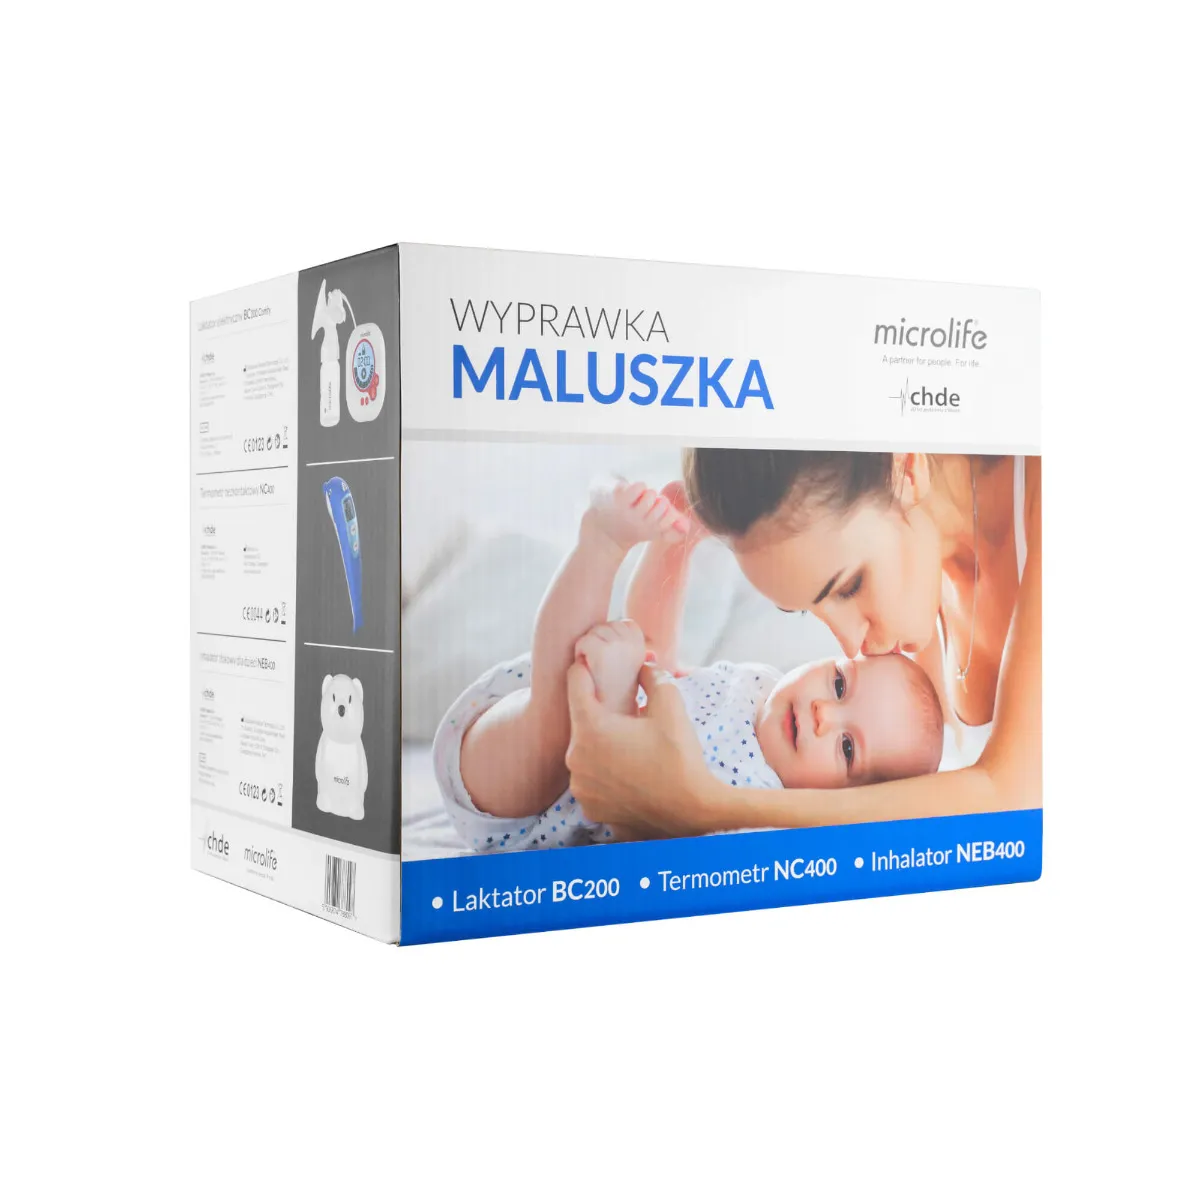 Microlife Wyprawka Maluszka, termometr NC 400 + inhalator NEB 400 + laktator BC 200 Comfy